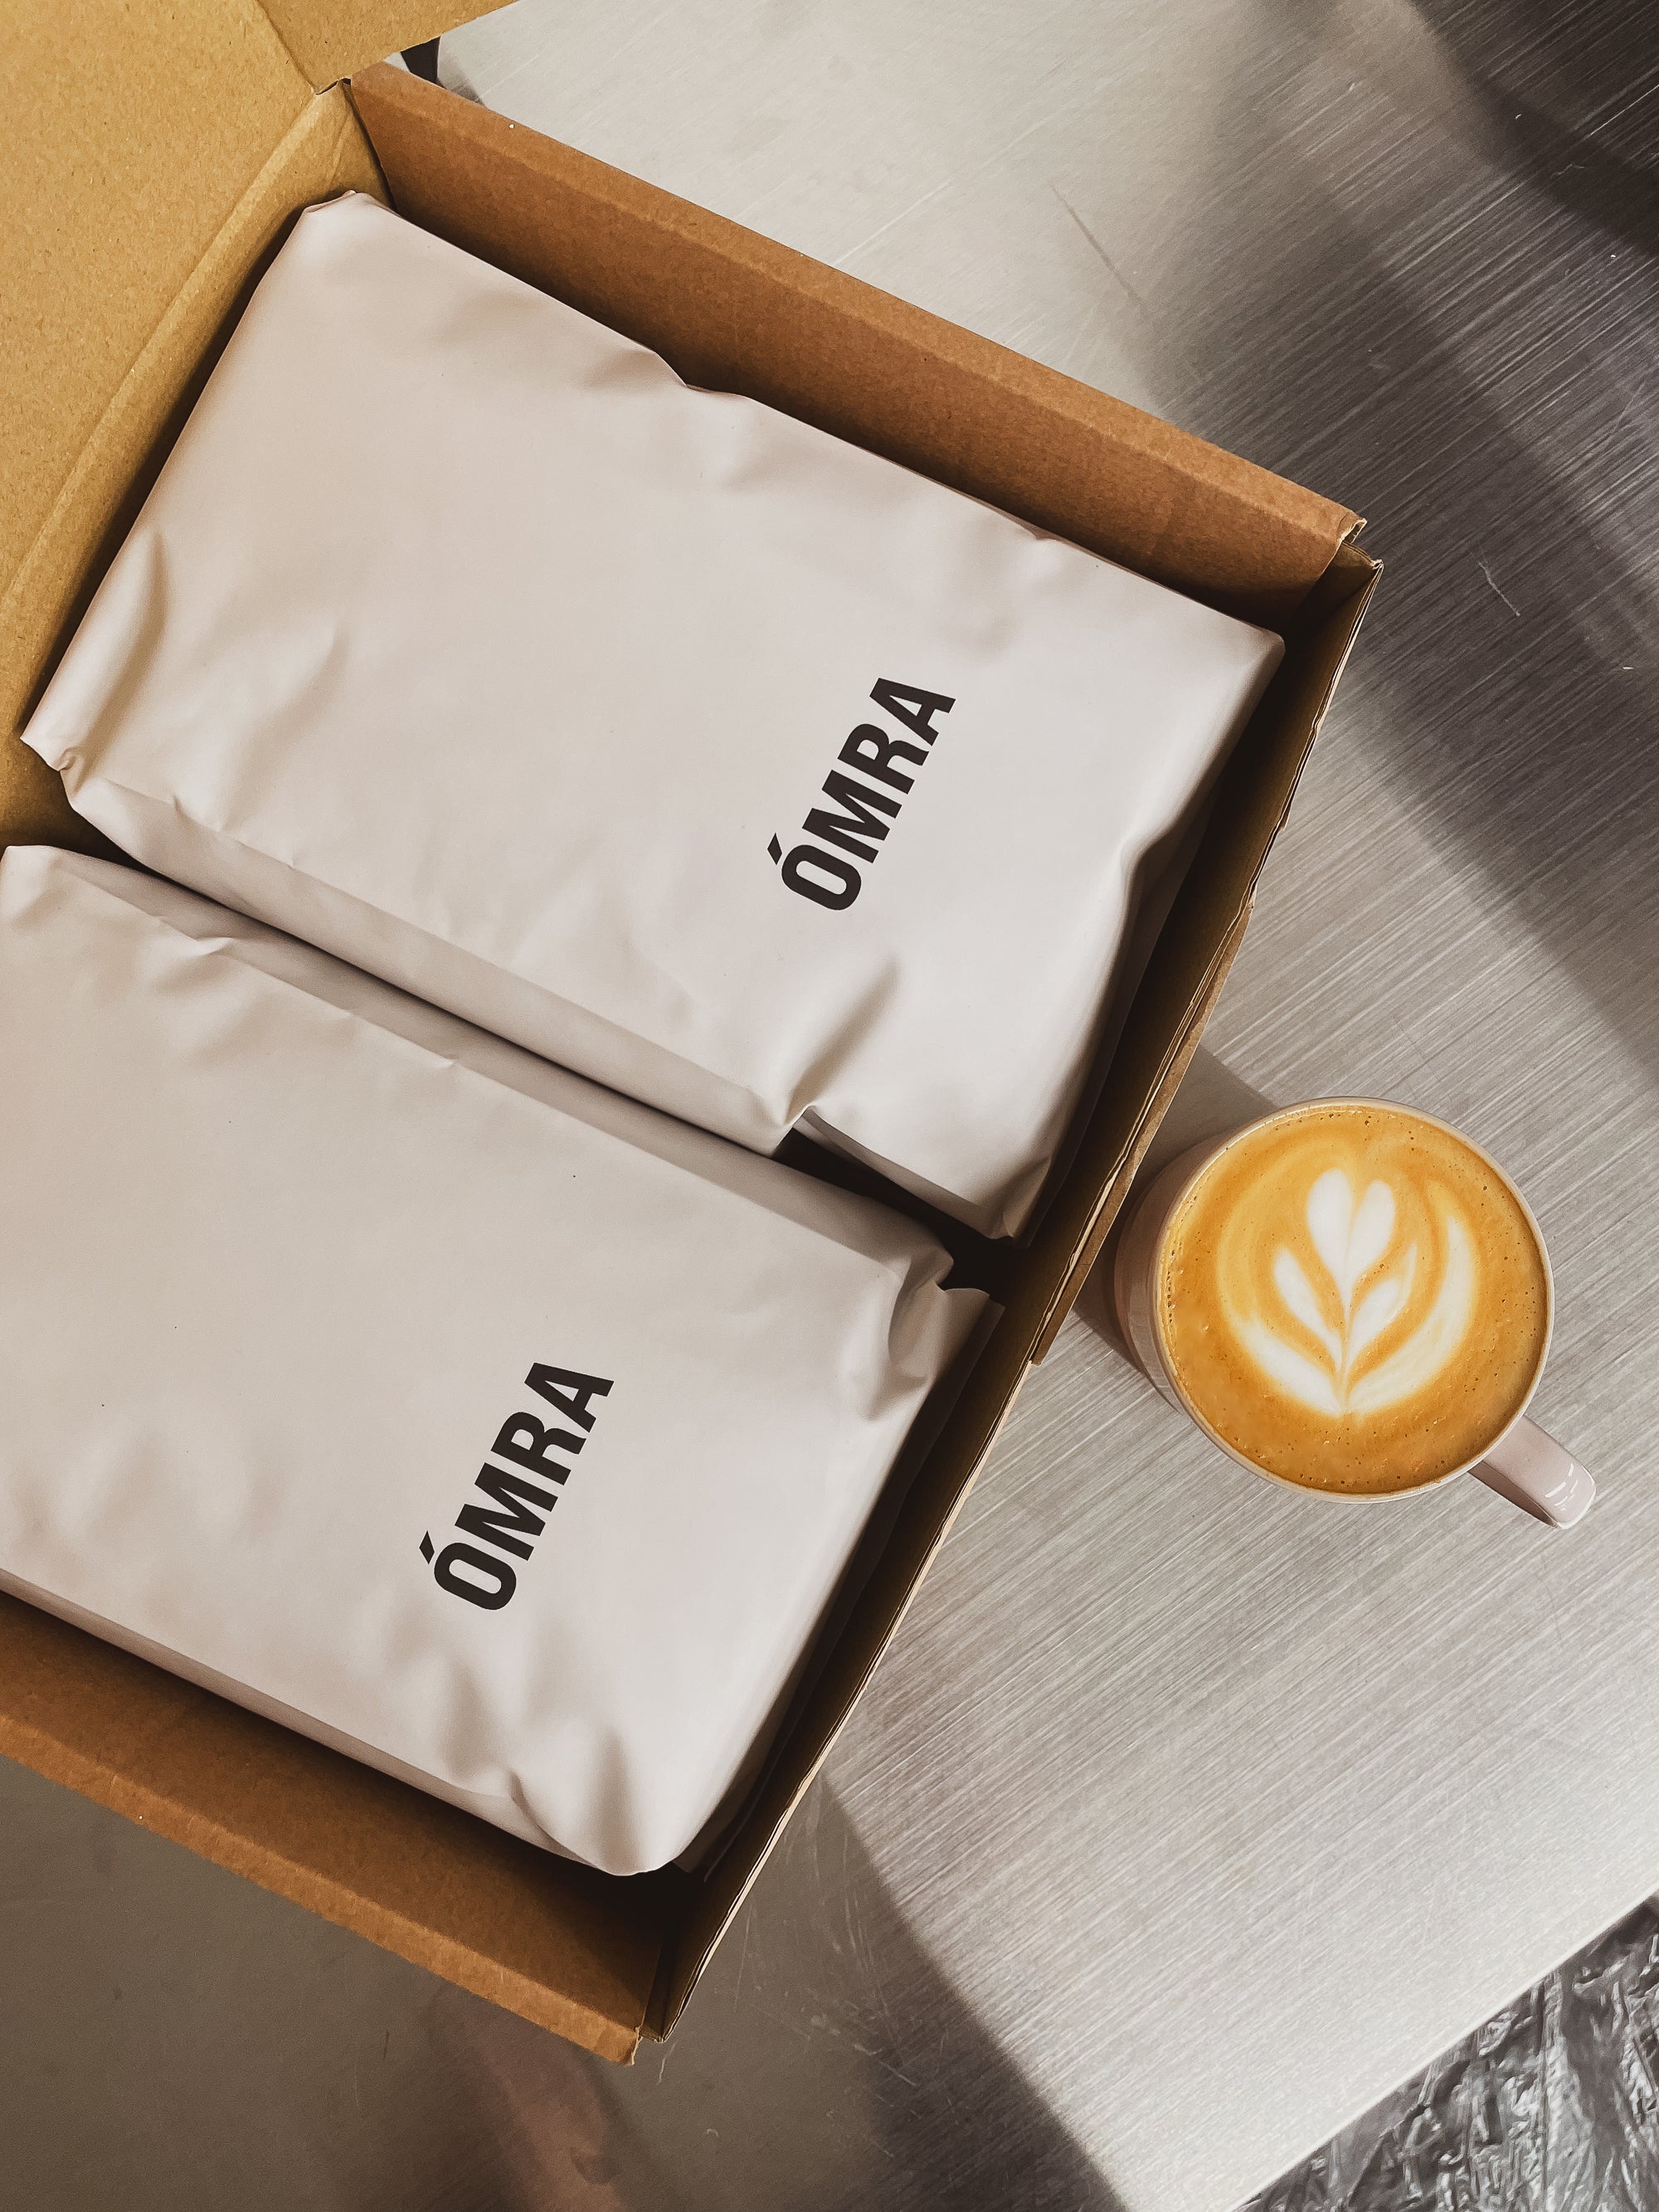 Bags of Ómra Specialty Coffee beside a freshly brewed latte with latte art.